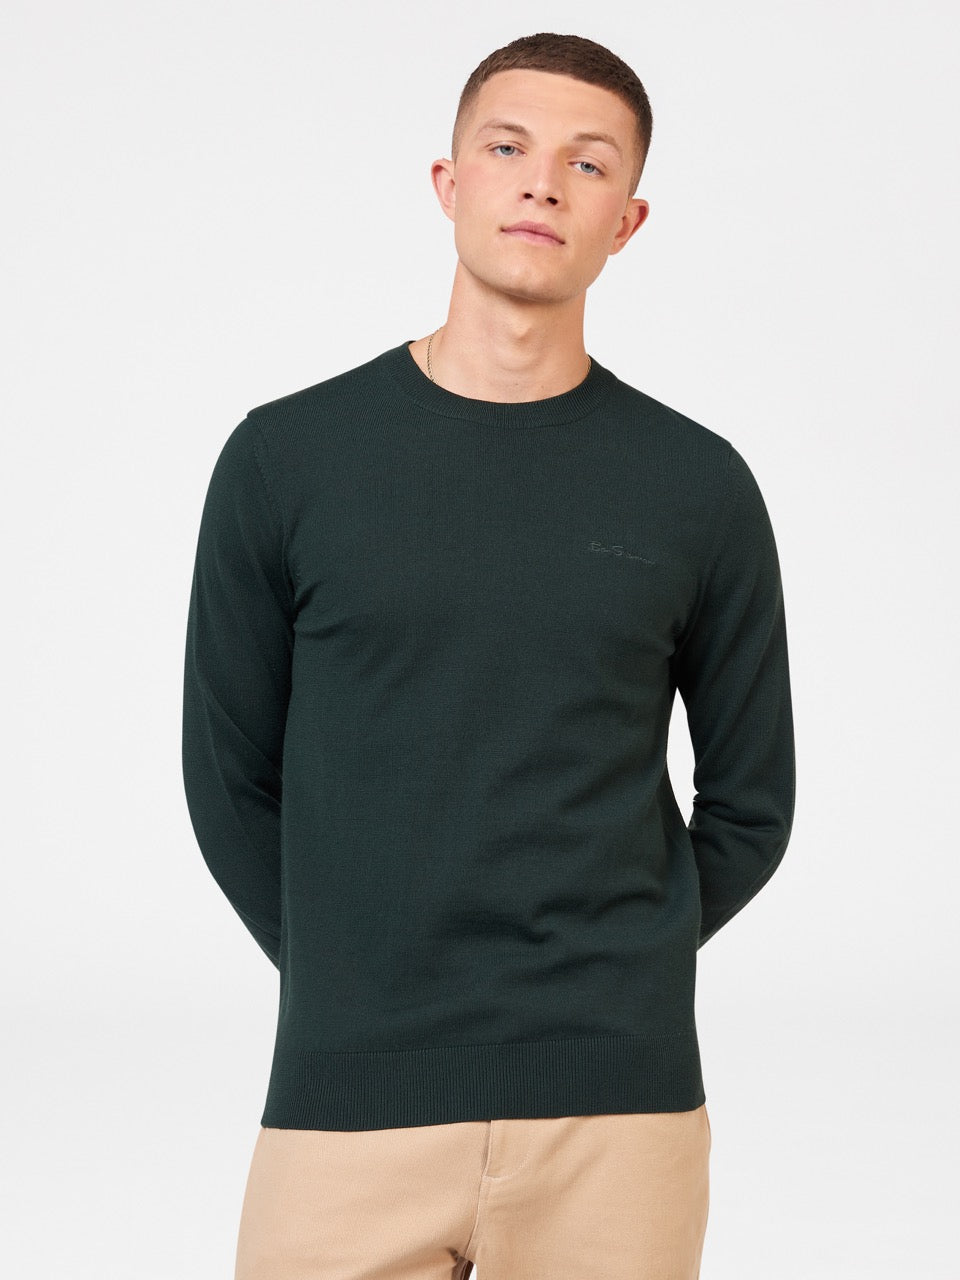 Signature Merino Crewneck Sweater - Dark Green - Ben Sherman